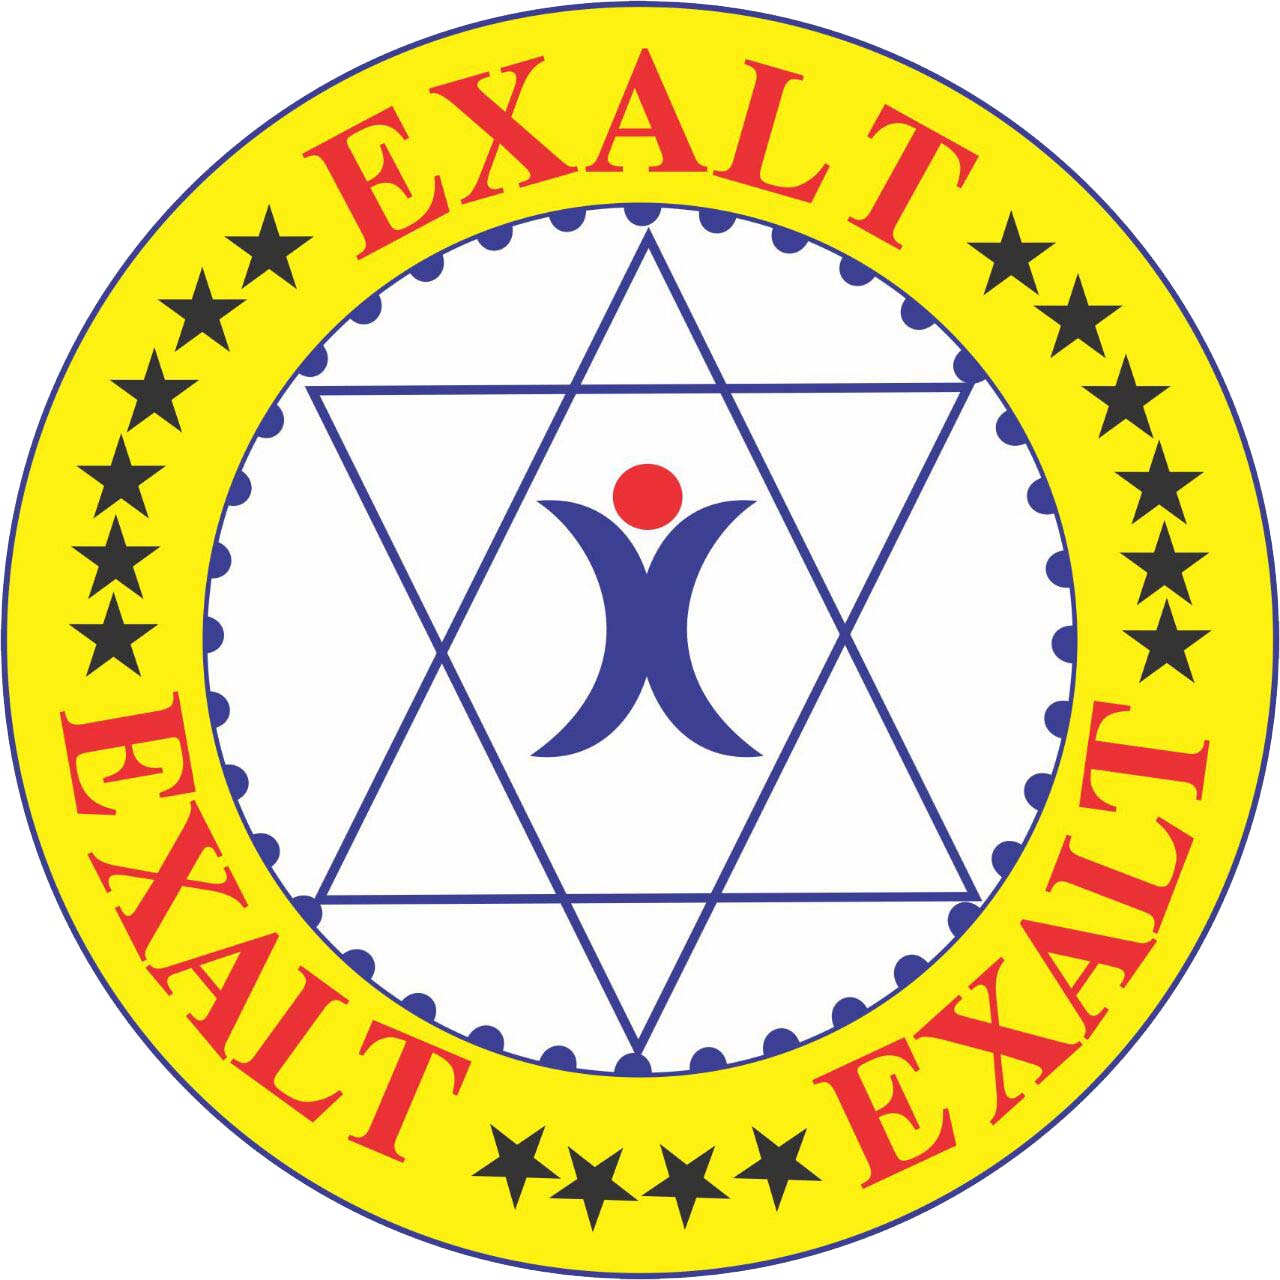 Exalt College of Education, Vaishali